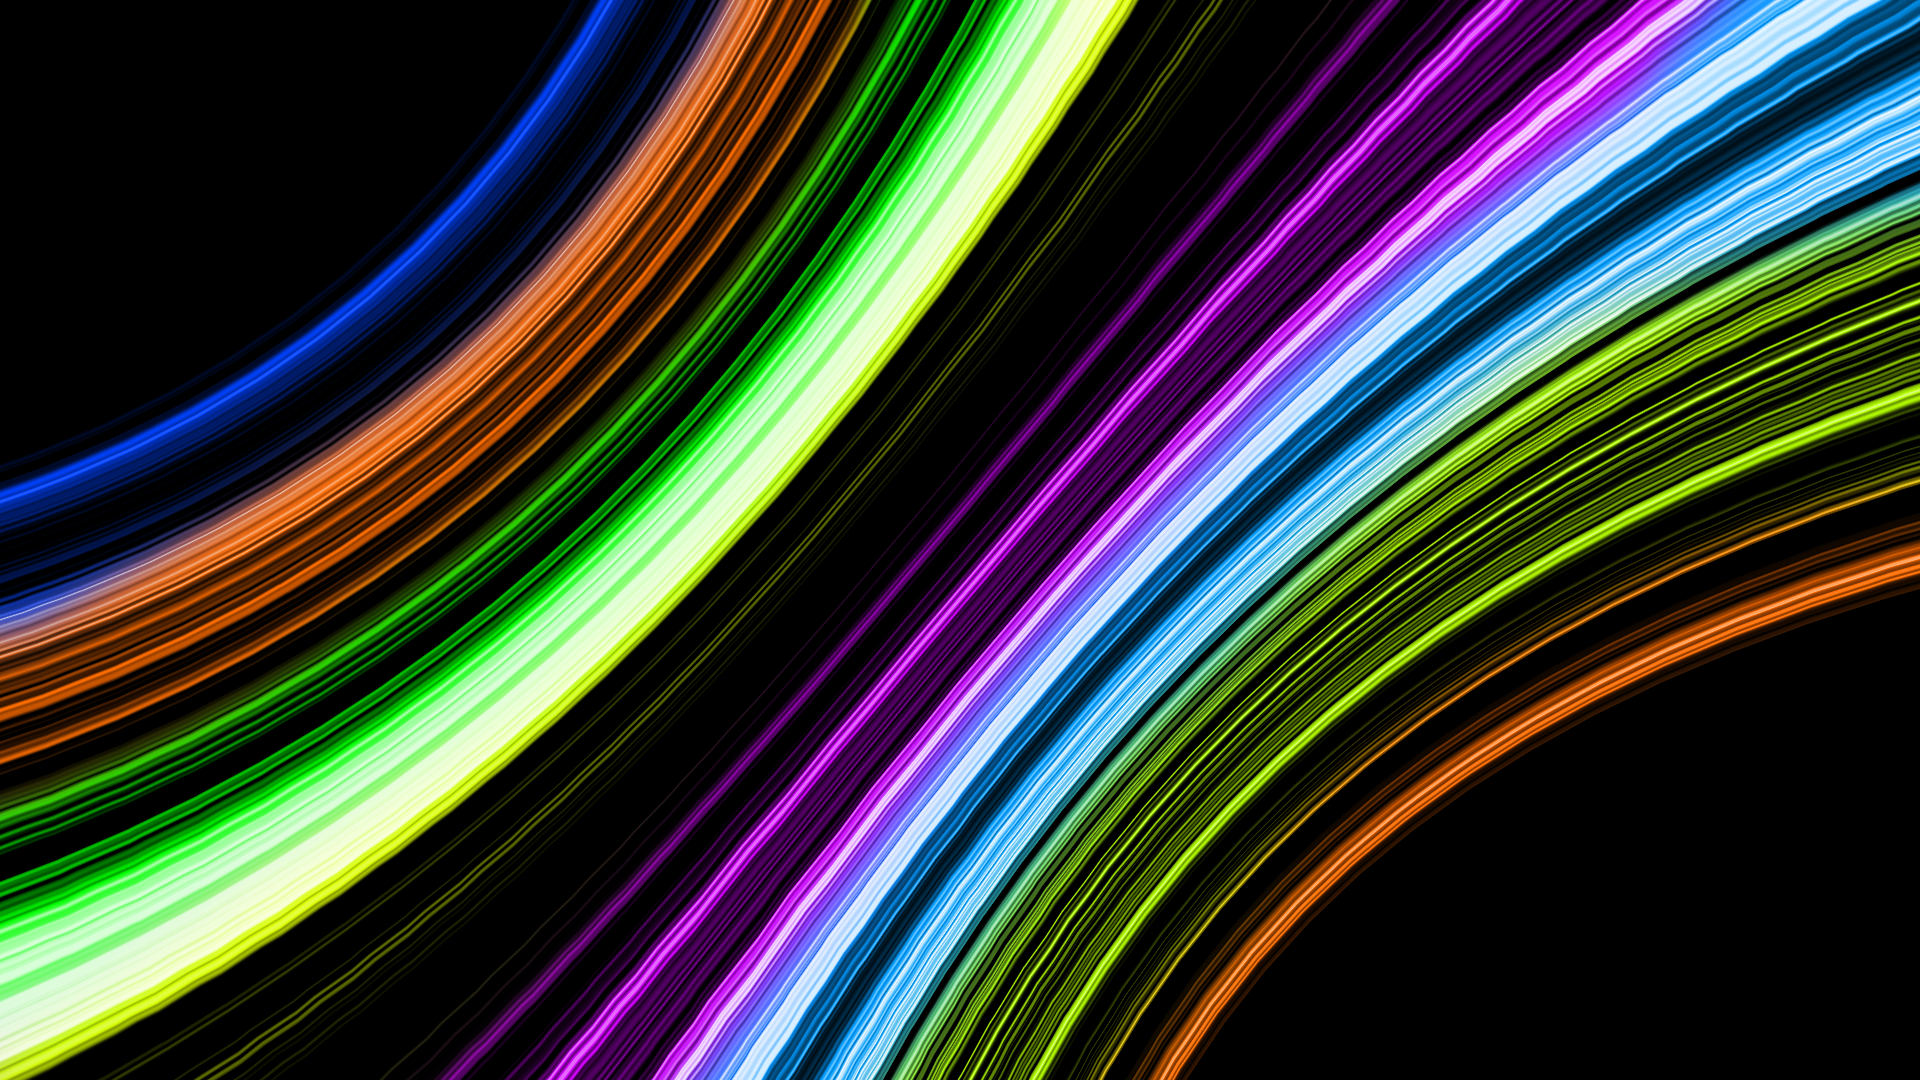 lines, stripes - desktop wallpaper